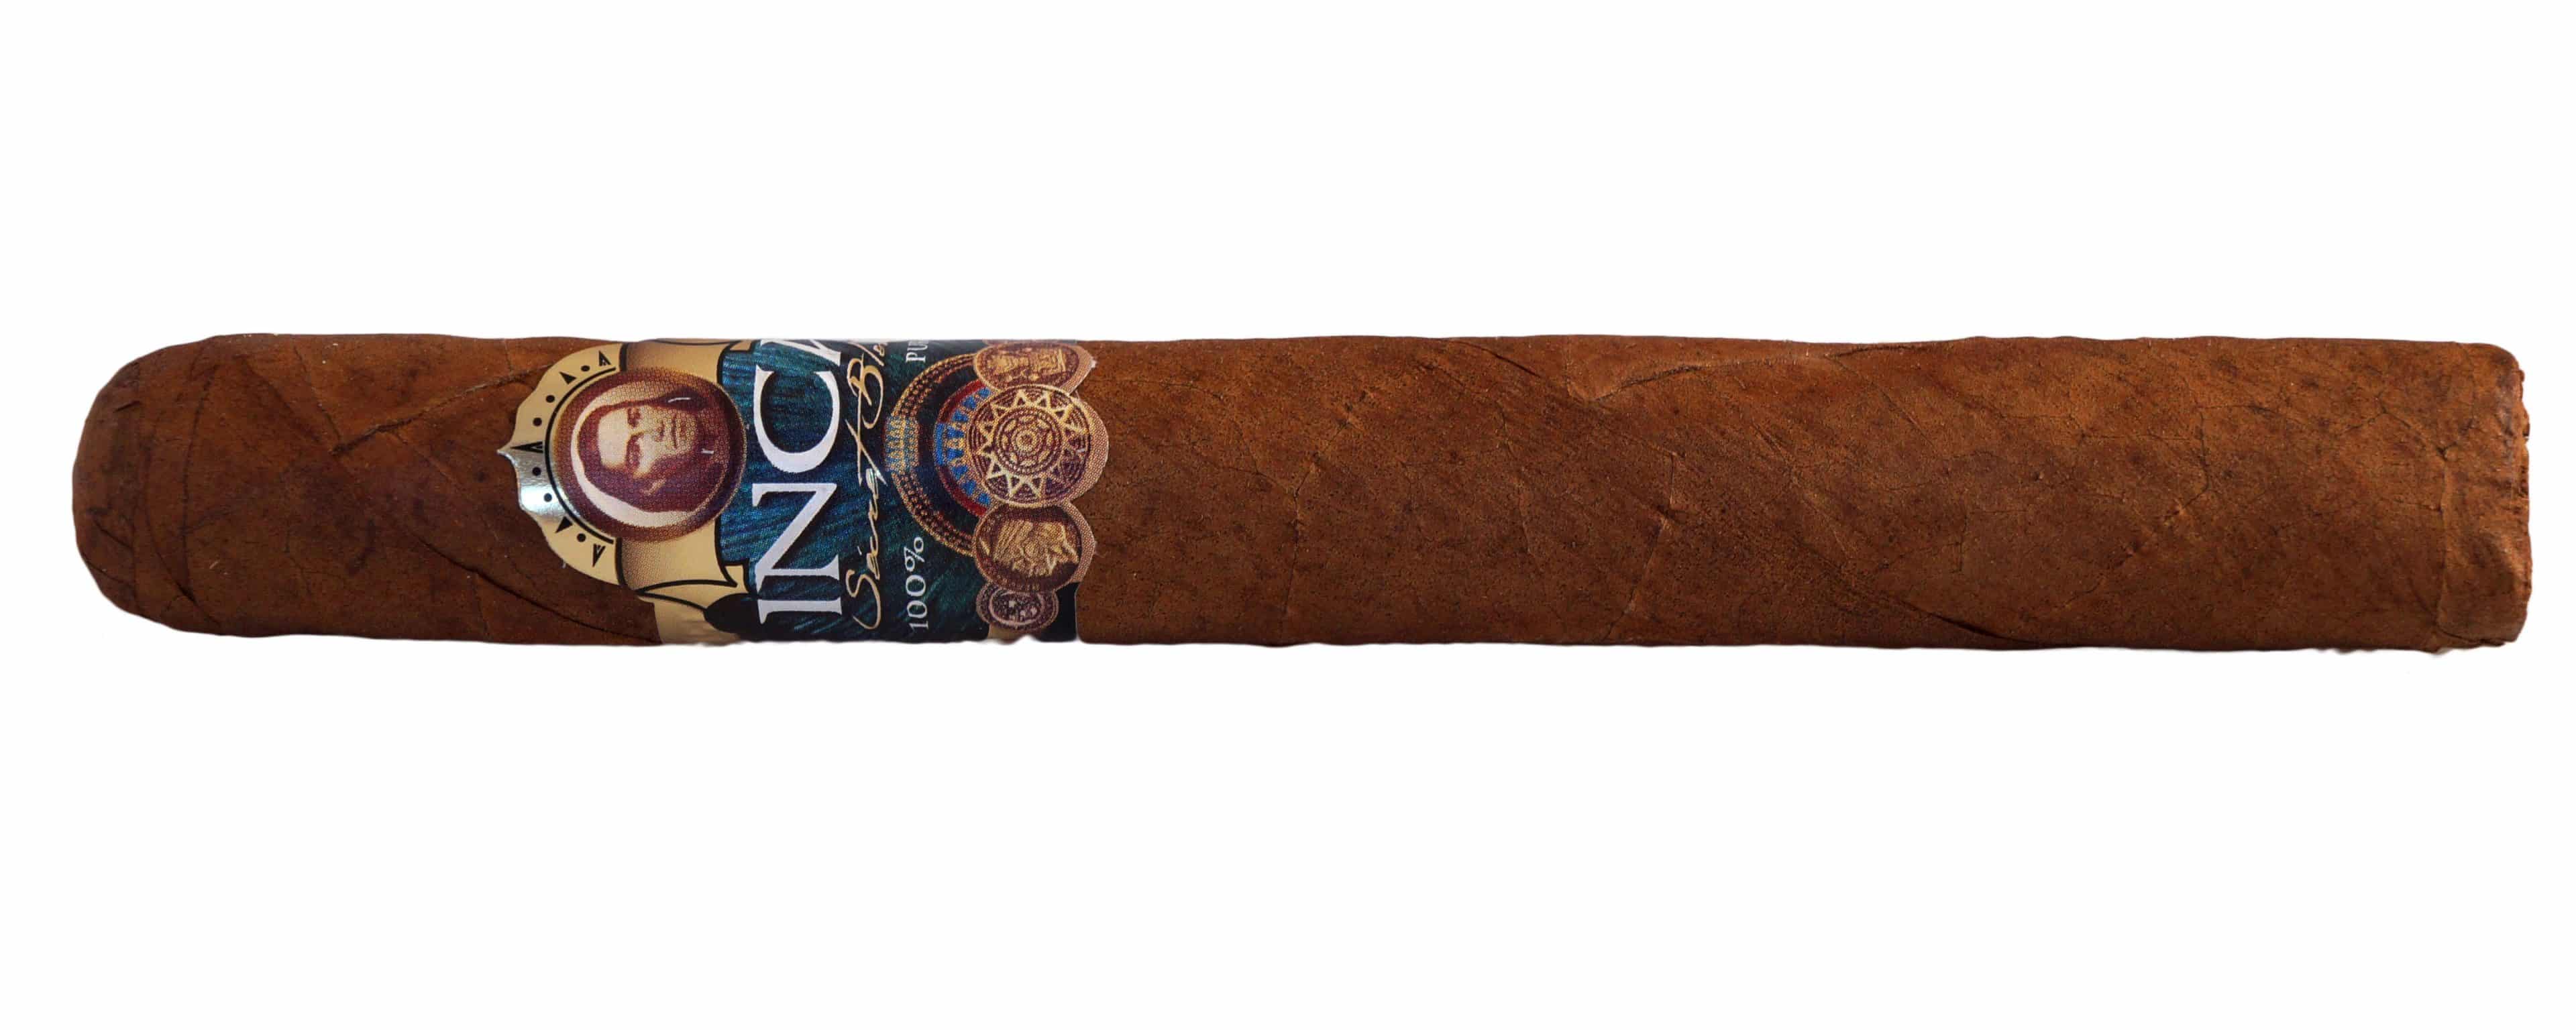 Blind Cigar Review: Inca | Secret Blend Tambo